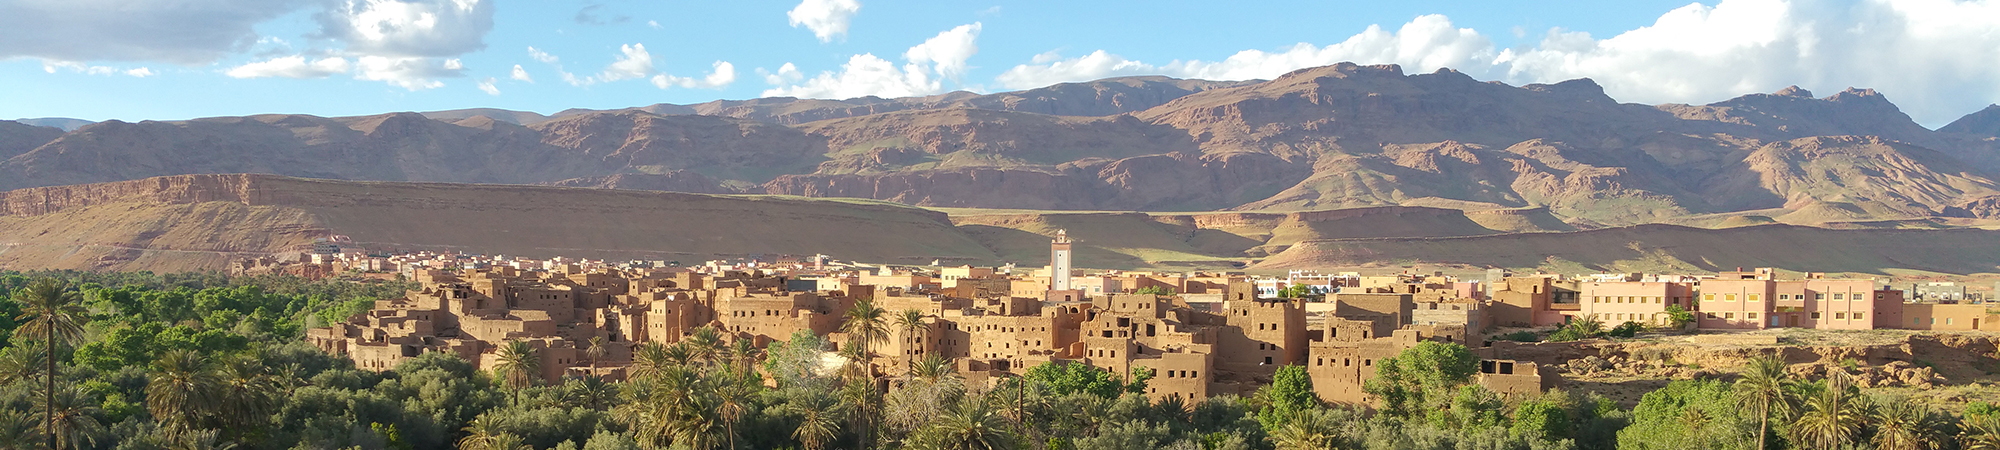 beautiful village in morocco